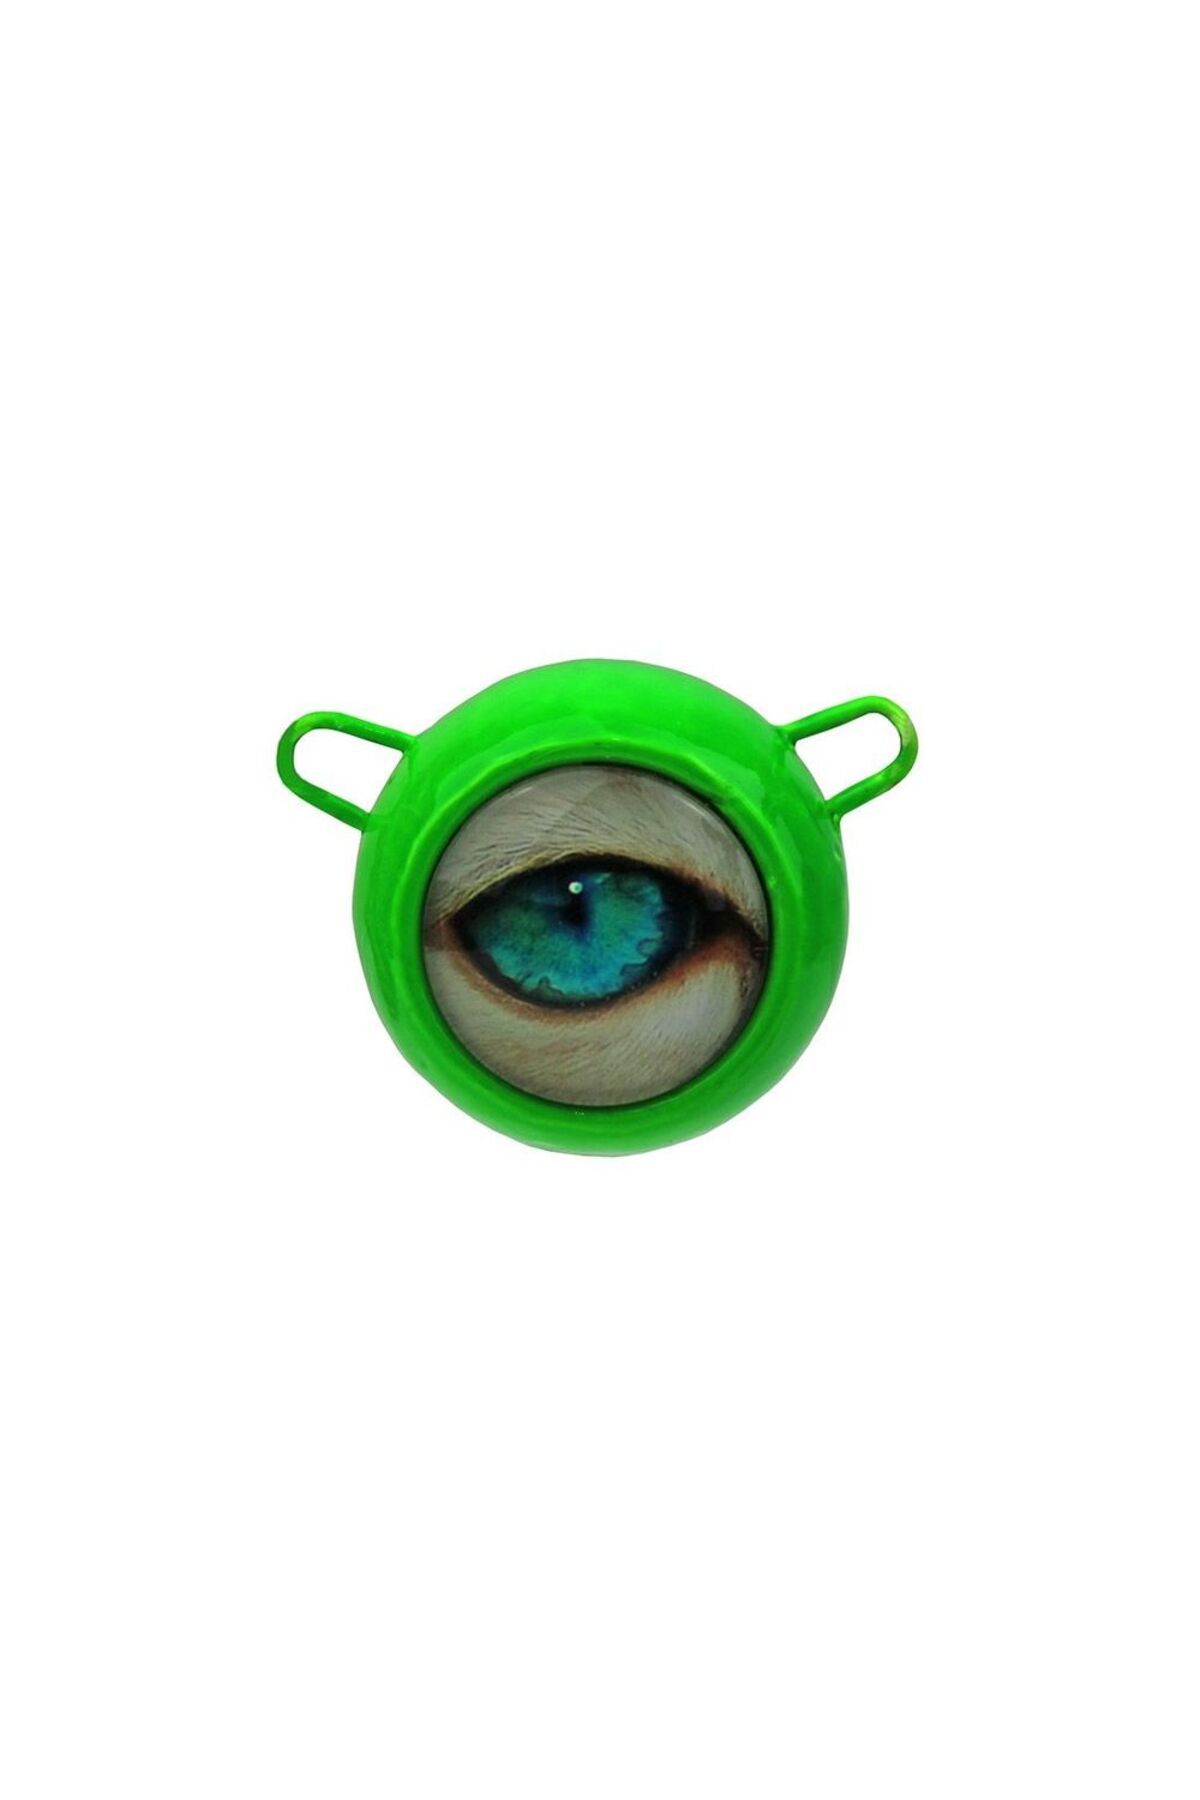 Anchor Melek Göz Yeşil 400 gr